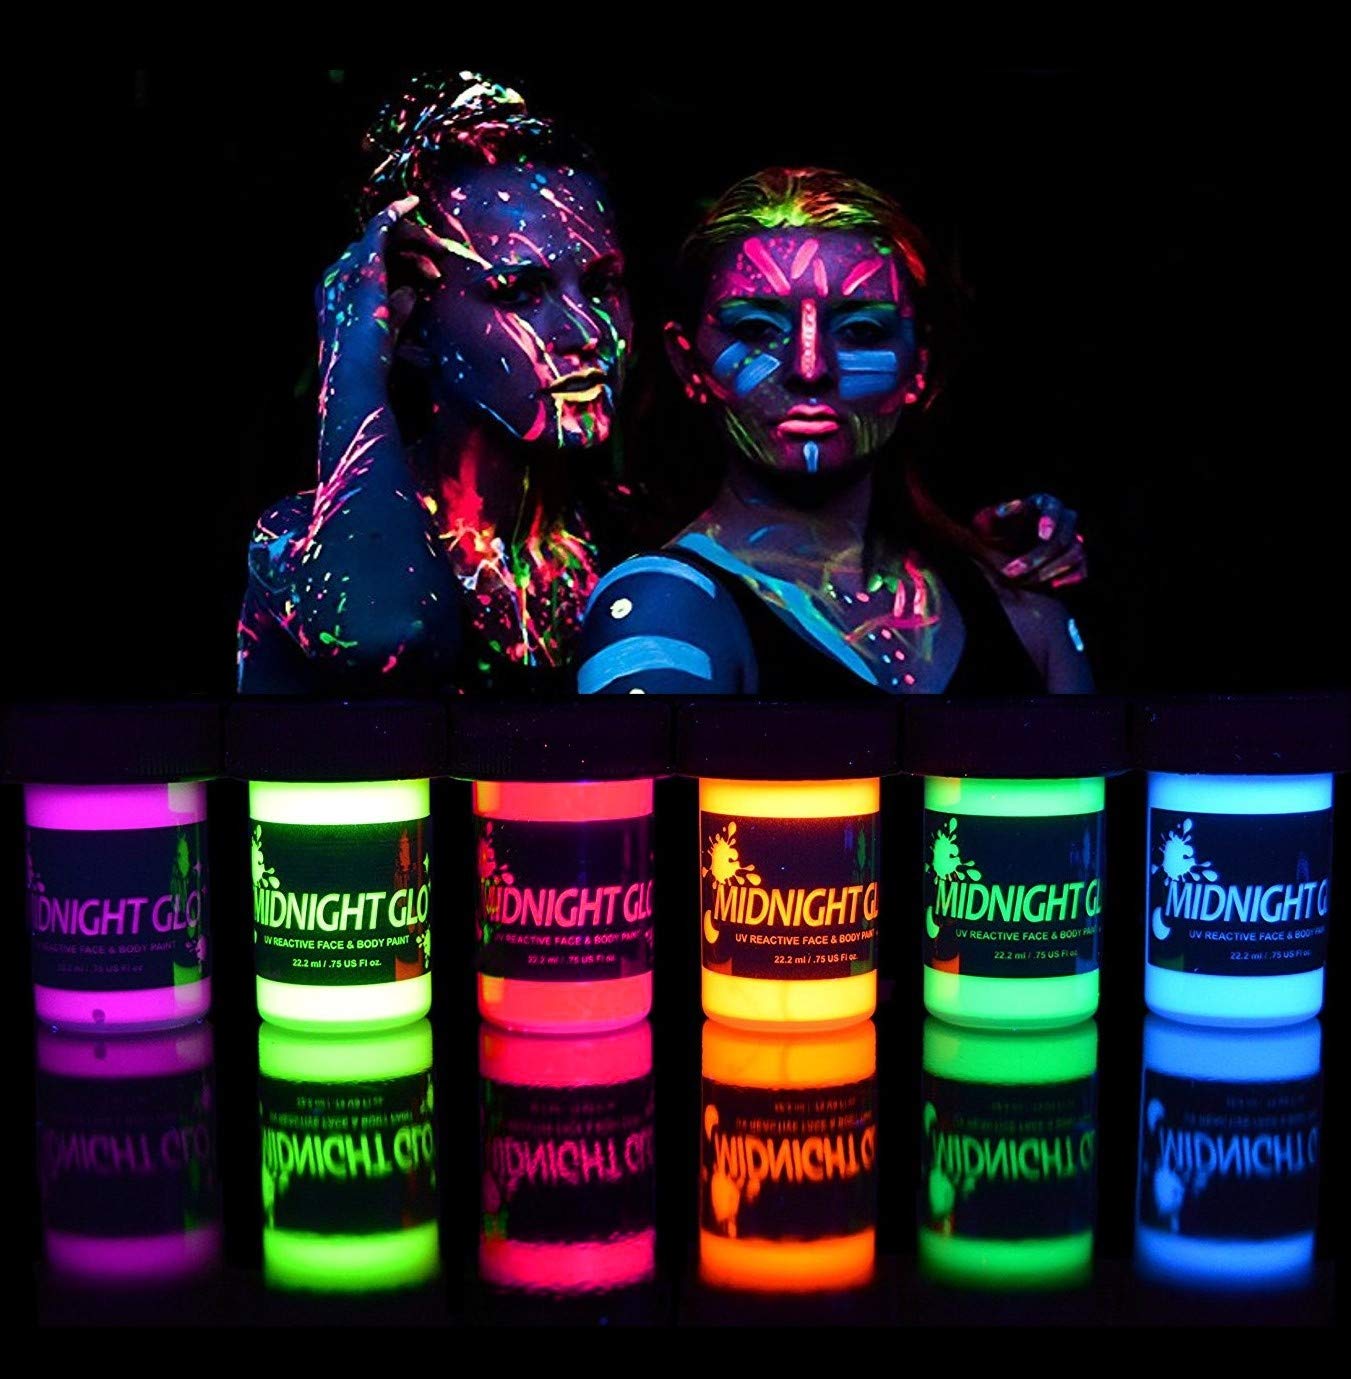 Midnight Glo UV Face & Body Paint Set - Fluorescent Face Paints - Blacklight Reactive - Safe, Washable, Non-Toxic (6 Bottles 0.75 oz. Each)